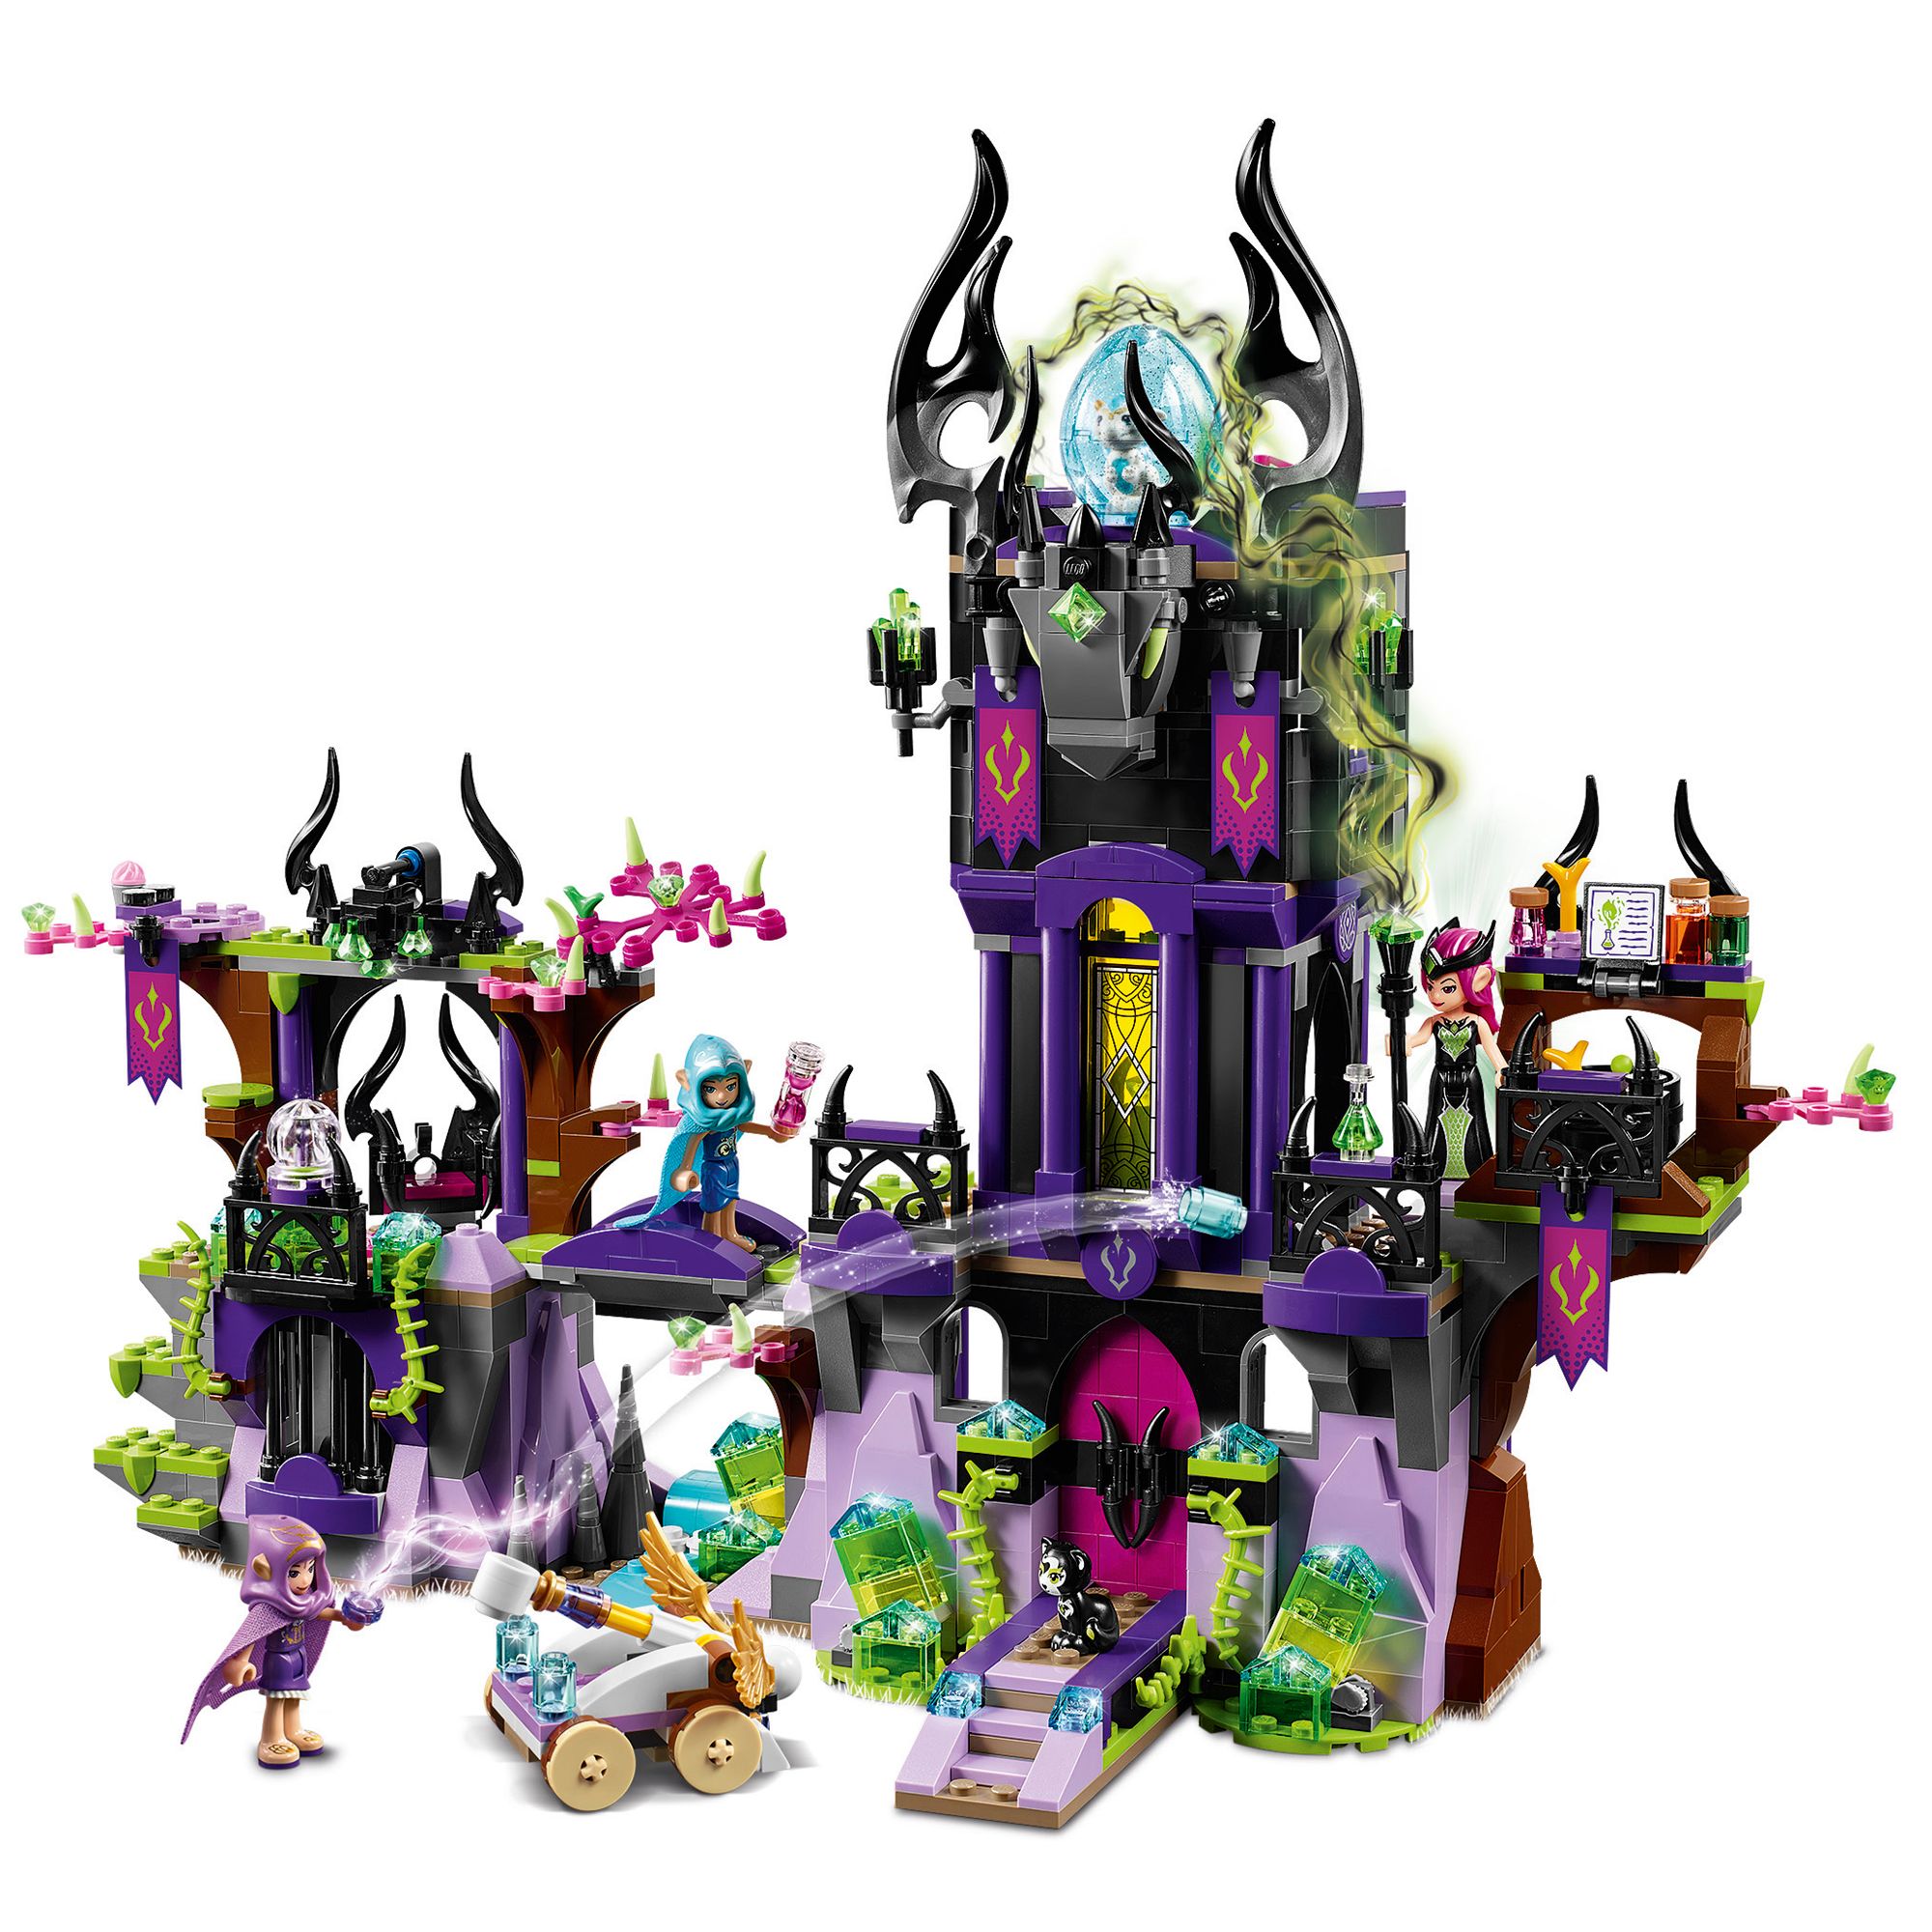 lego elves ragana's magic shadow castle